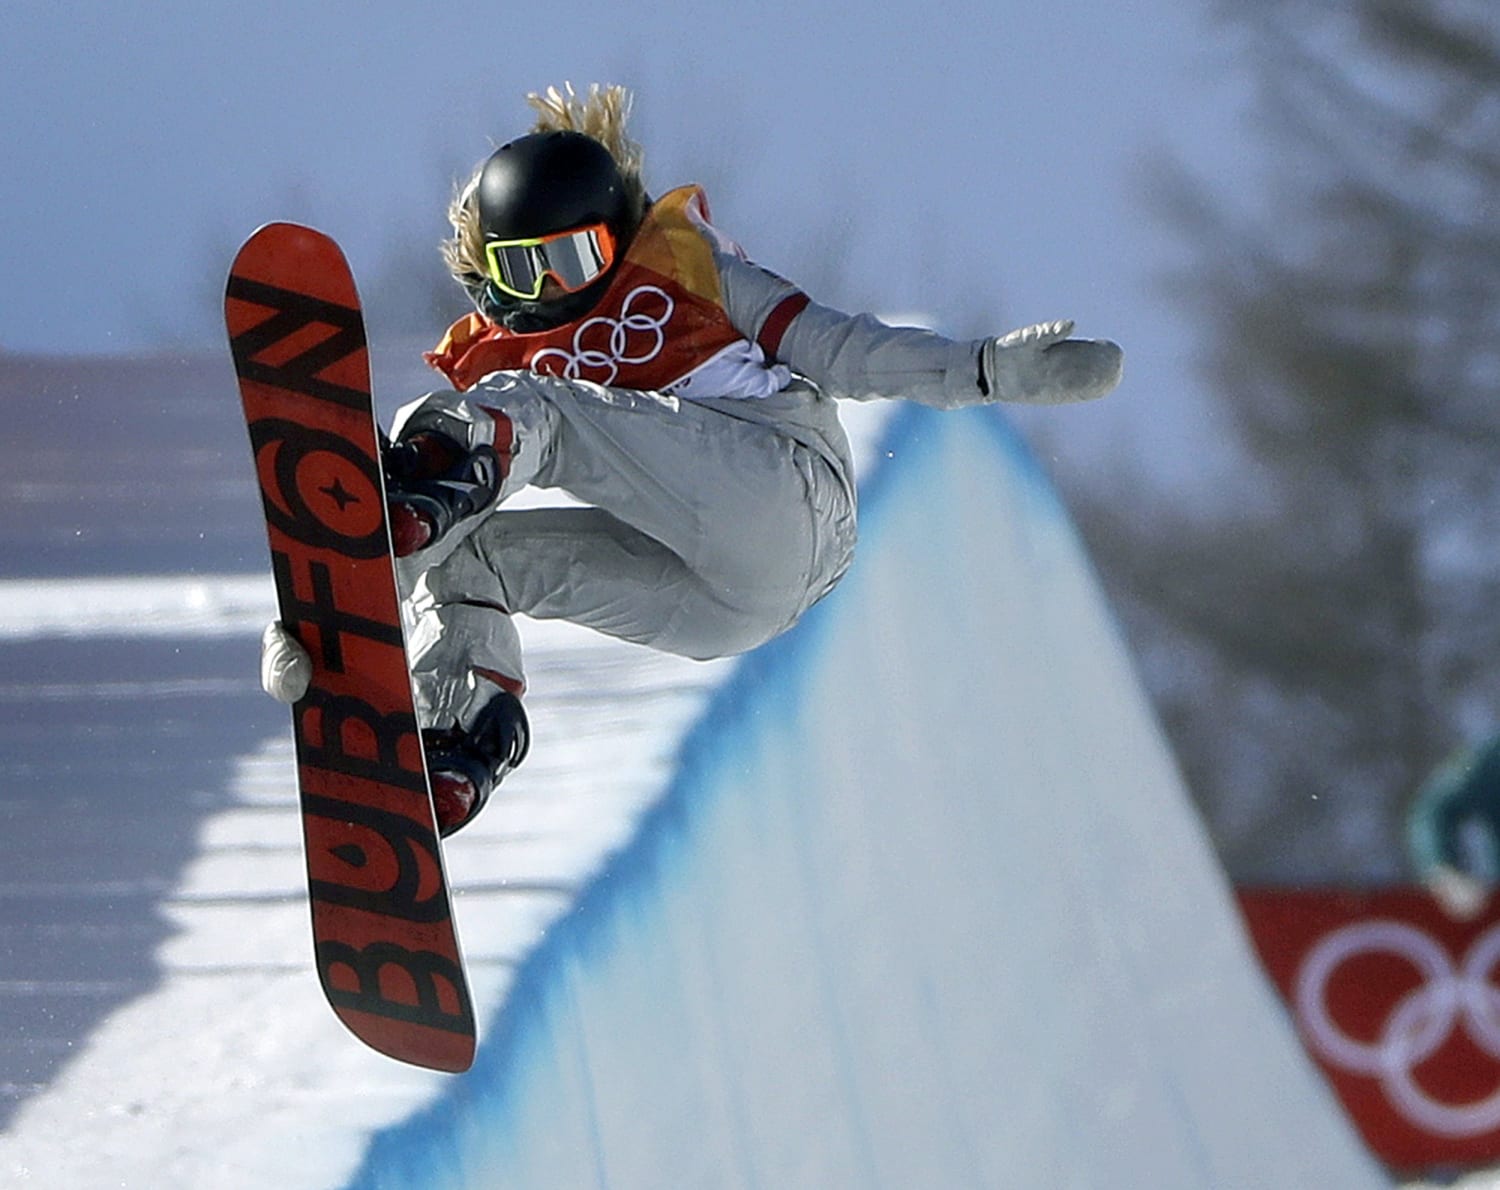 American phenom Chloe Kim wins gold in snowboard halfpipe